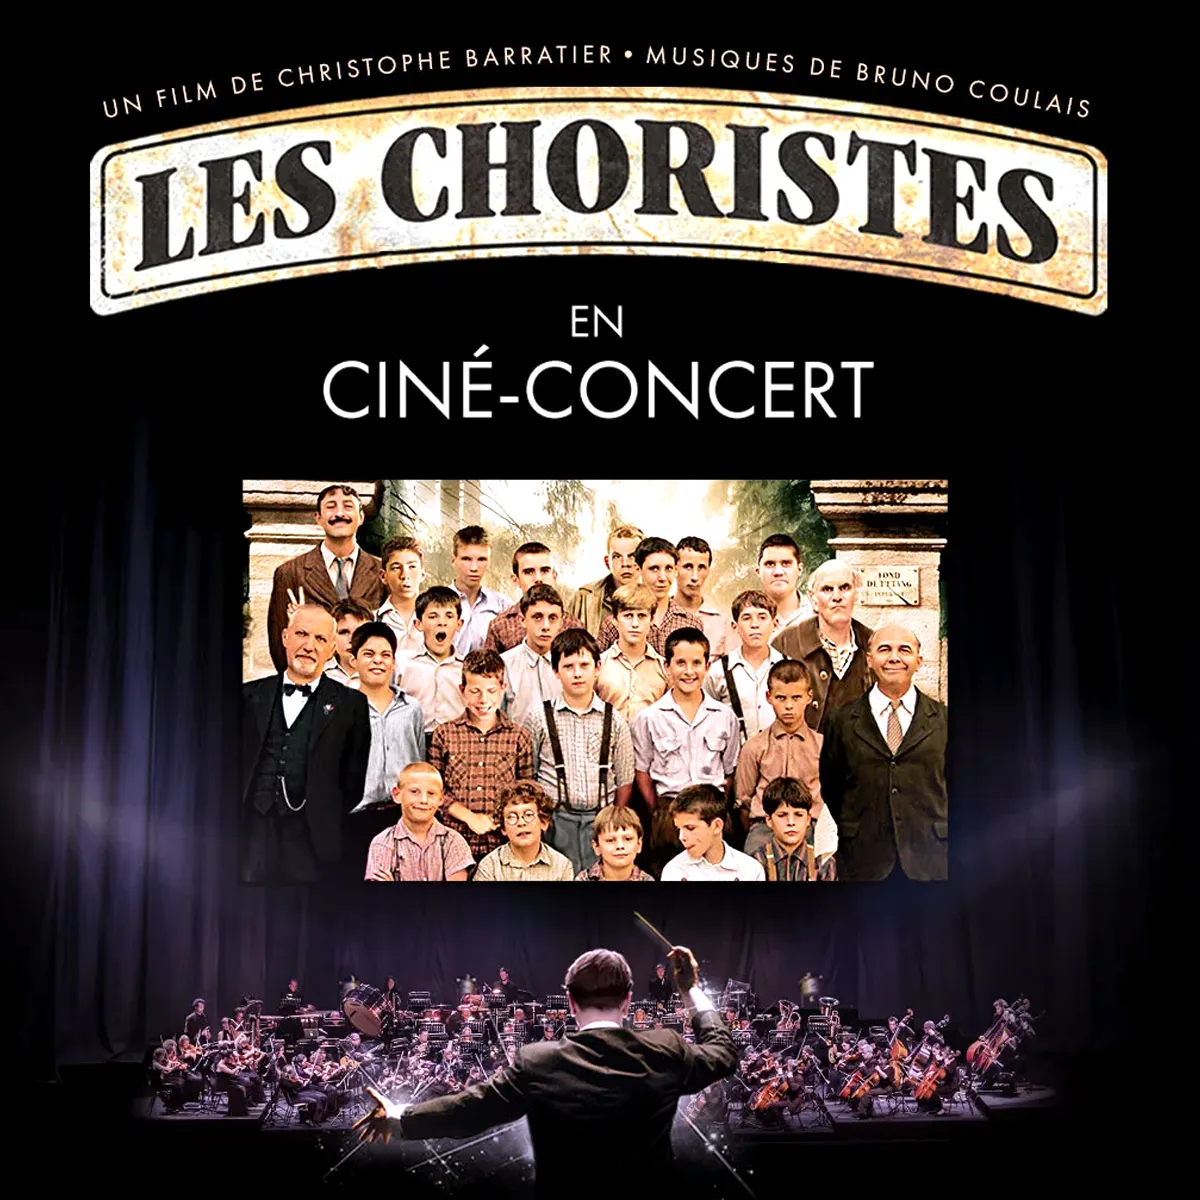 Les Choristes - Les Choristes En Concert (DVD, 2005)